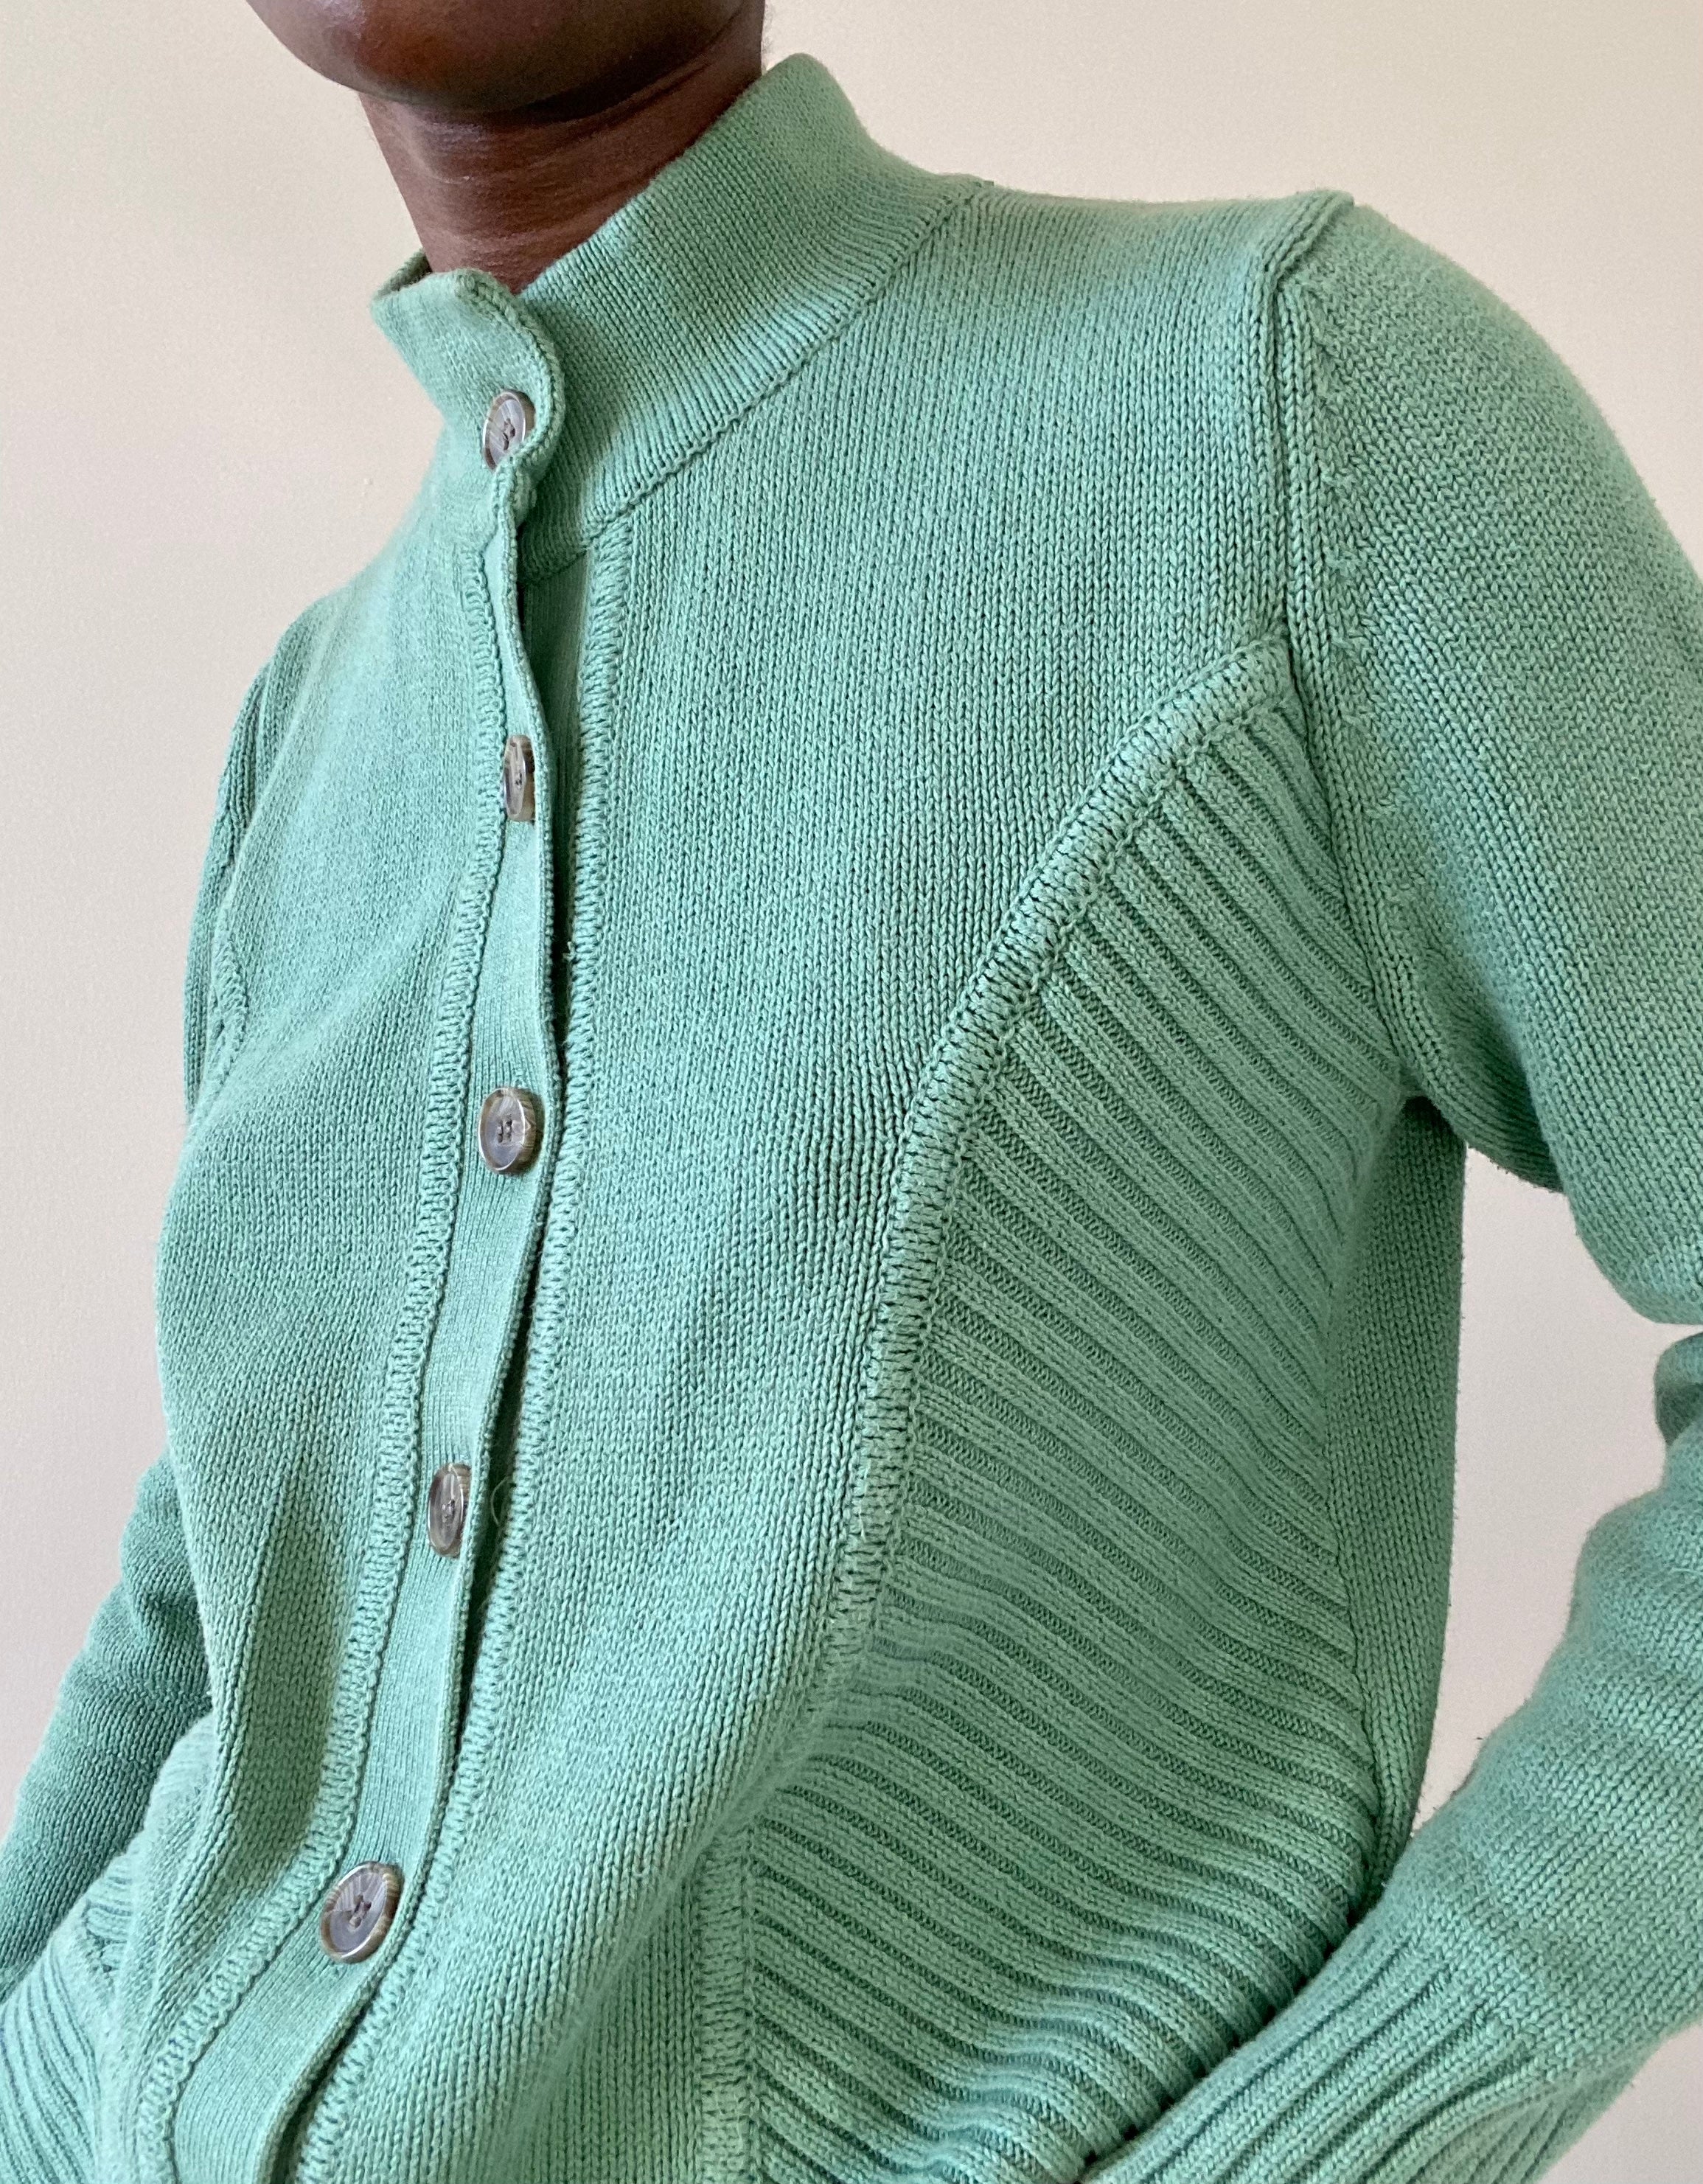 Turquoise Knit Cardigan